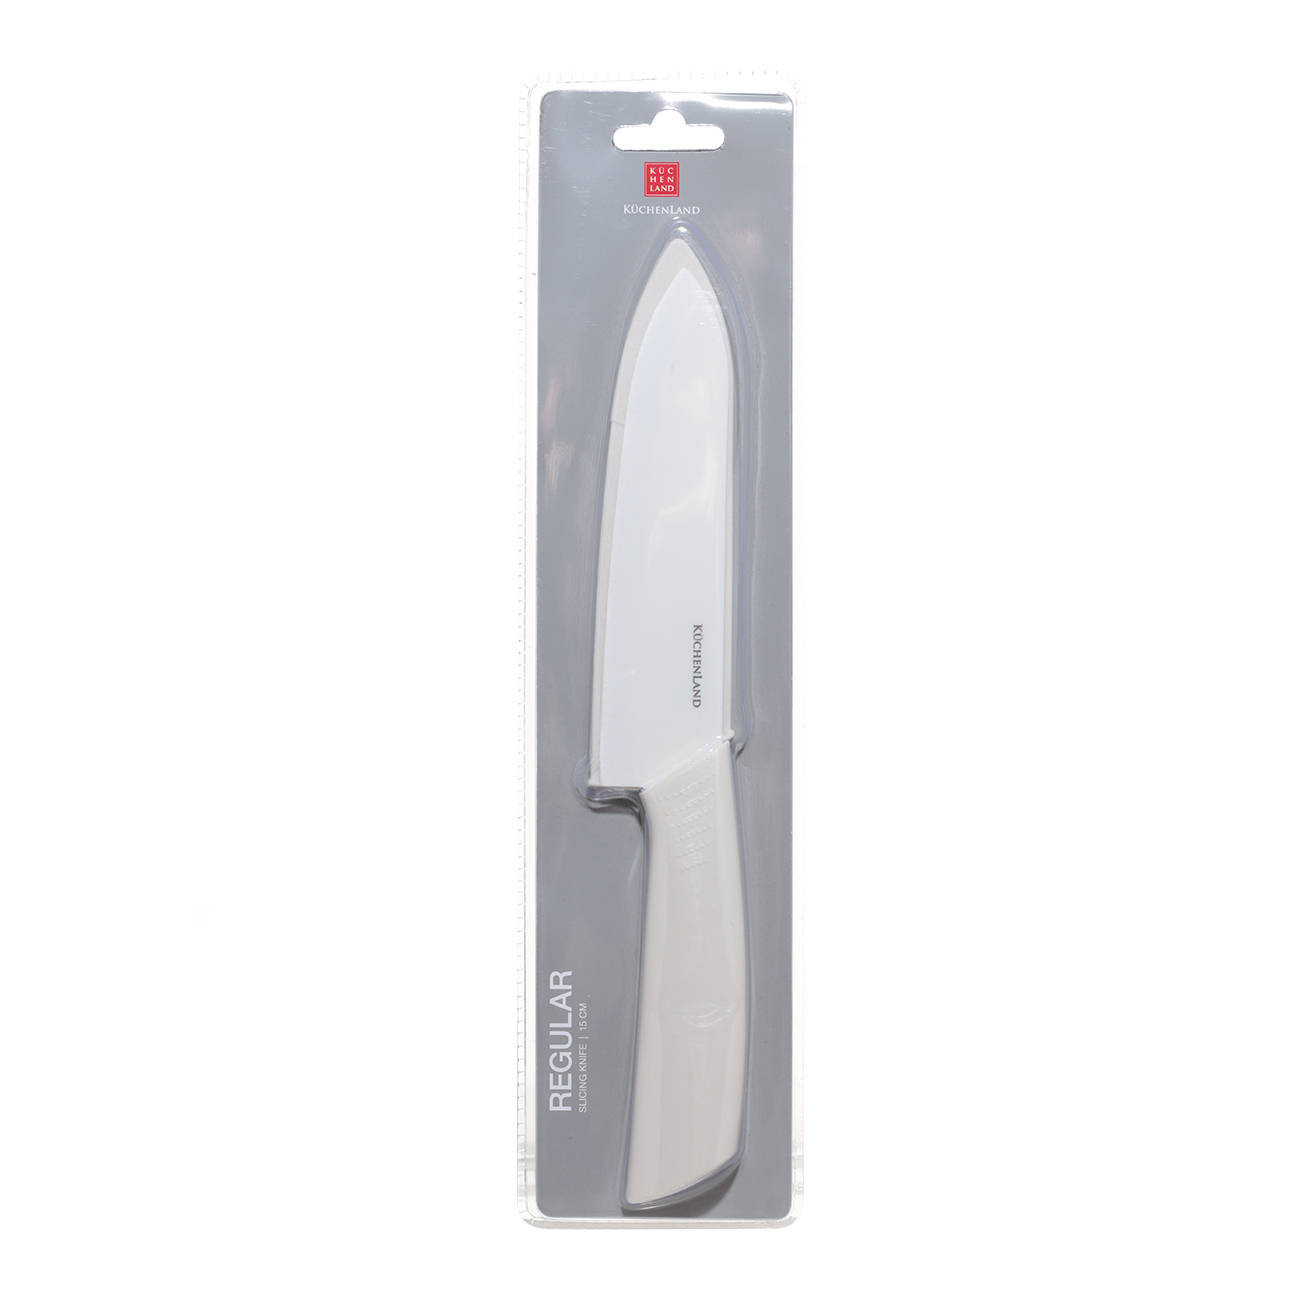 Нож для нарезки, 15 см, с чехлом, керамика/пластик, молочный, Regular